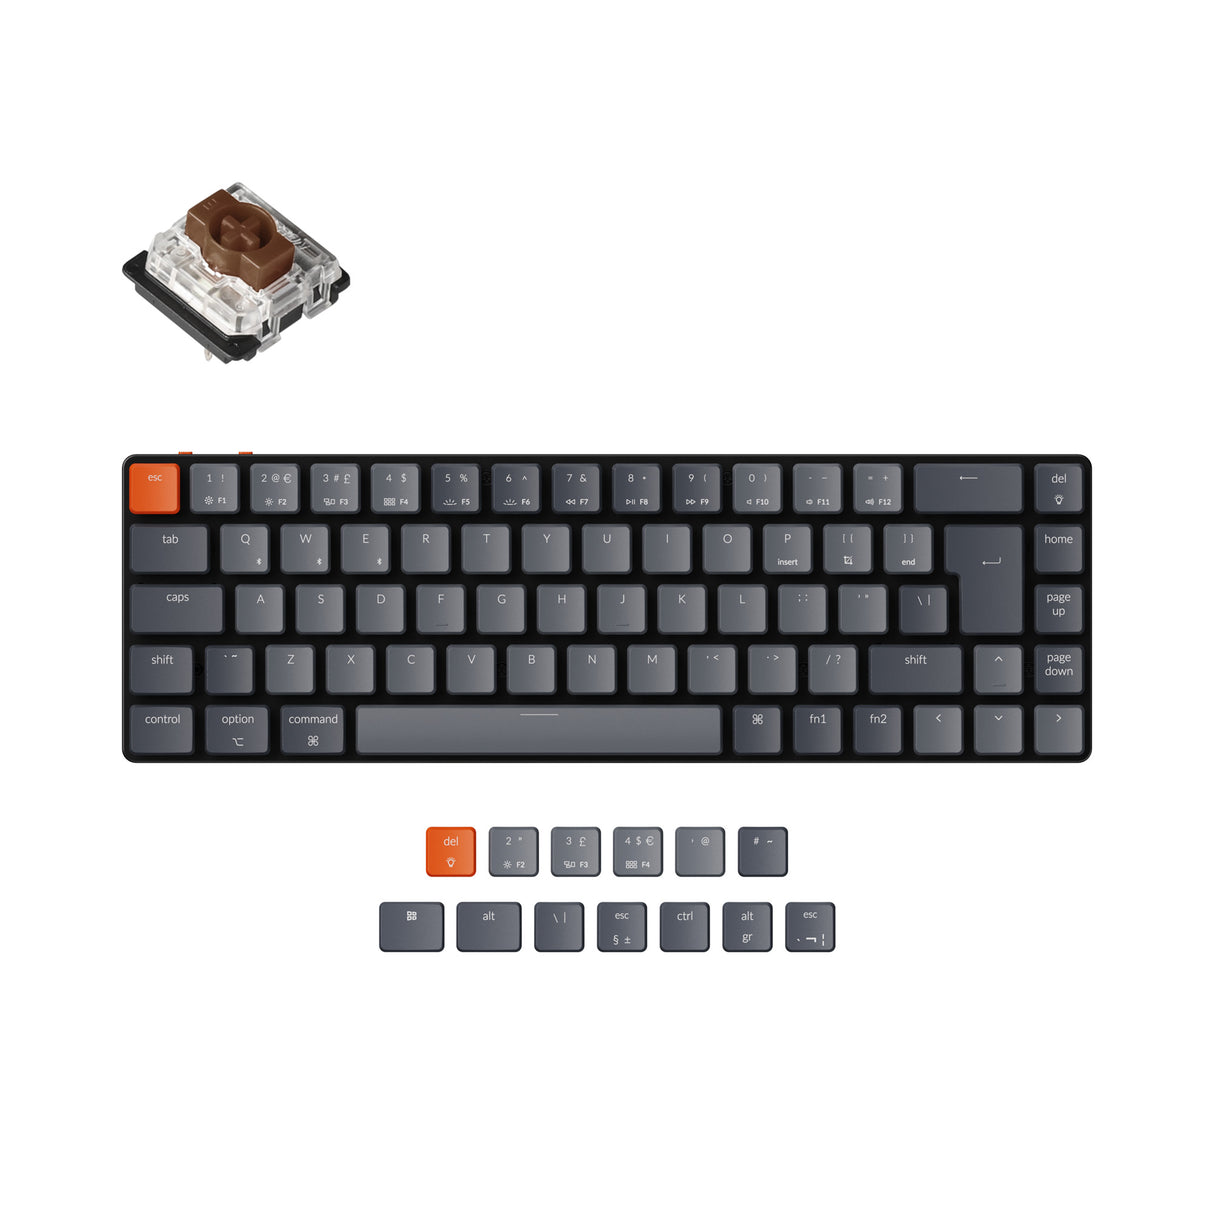 Keychron K7 ultra slim compact wireless mechanical keyboard for Mac Windows low profile Gateron brown switch white backlight UK ISO layout